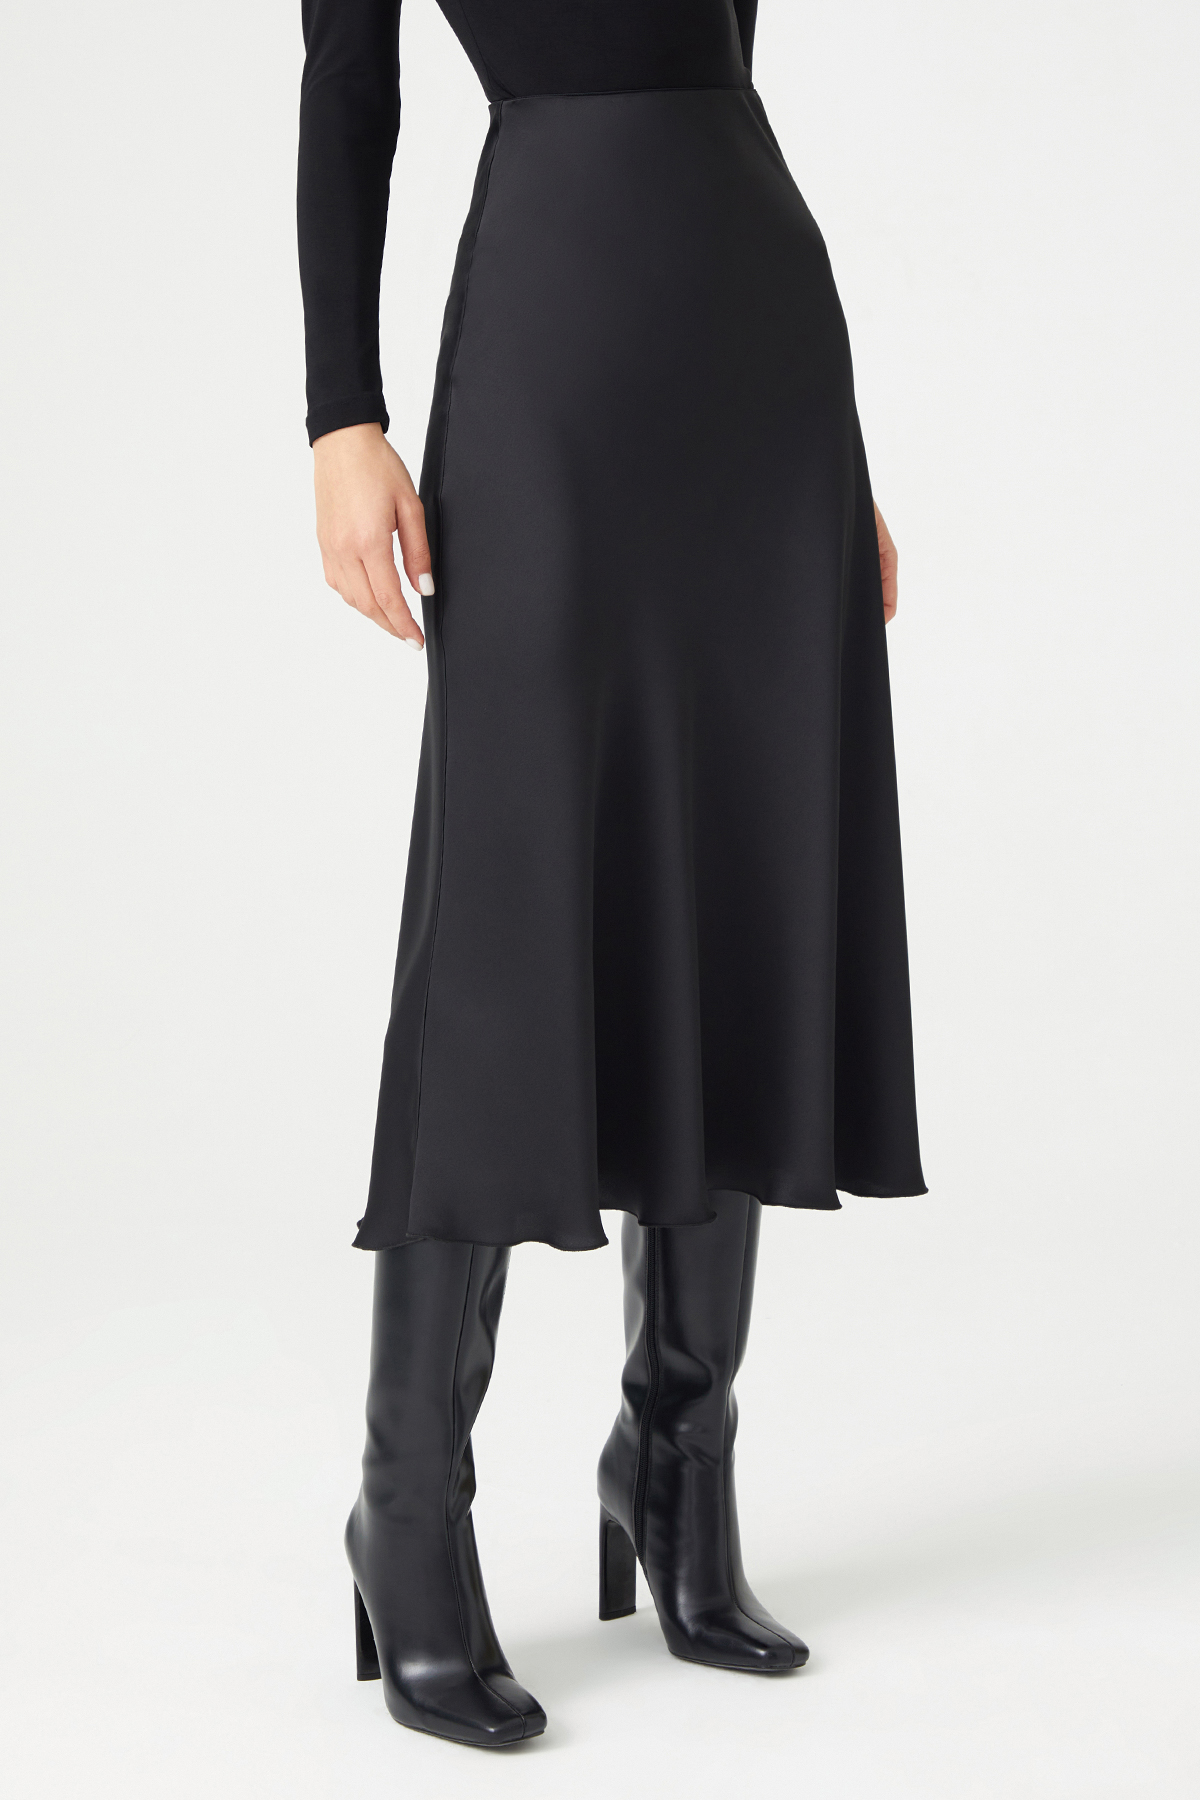 JOSSELYN Satin Midi Black Skirt